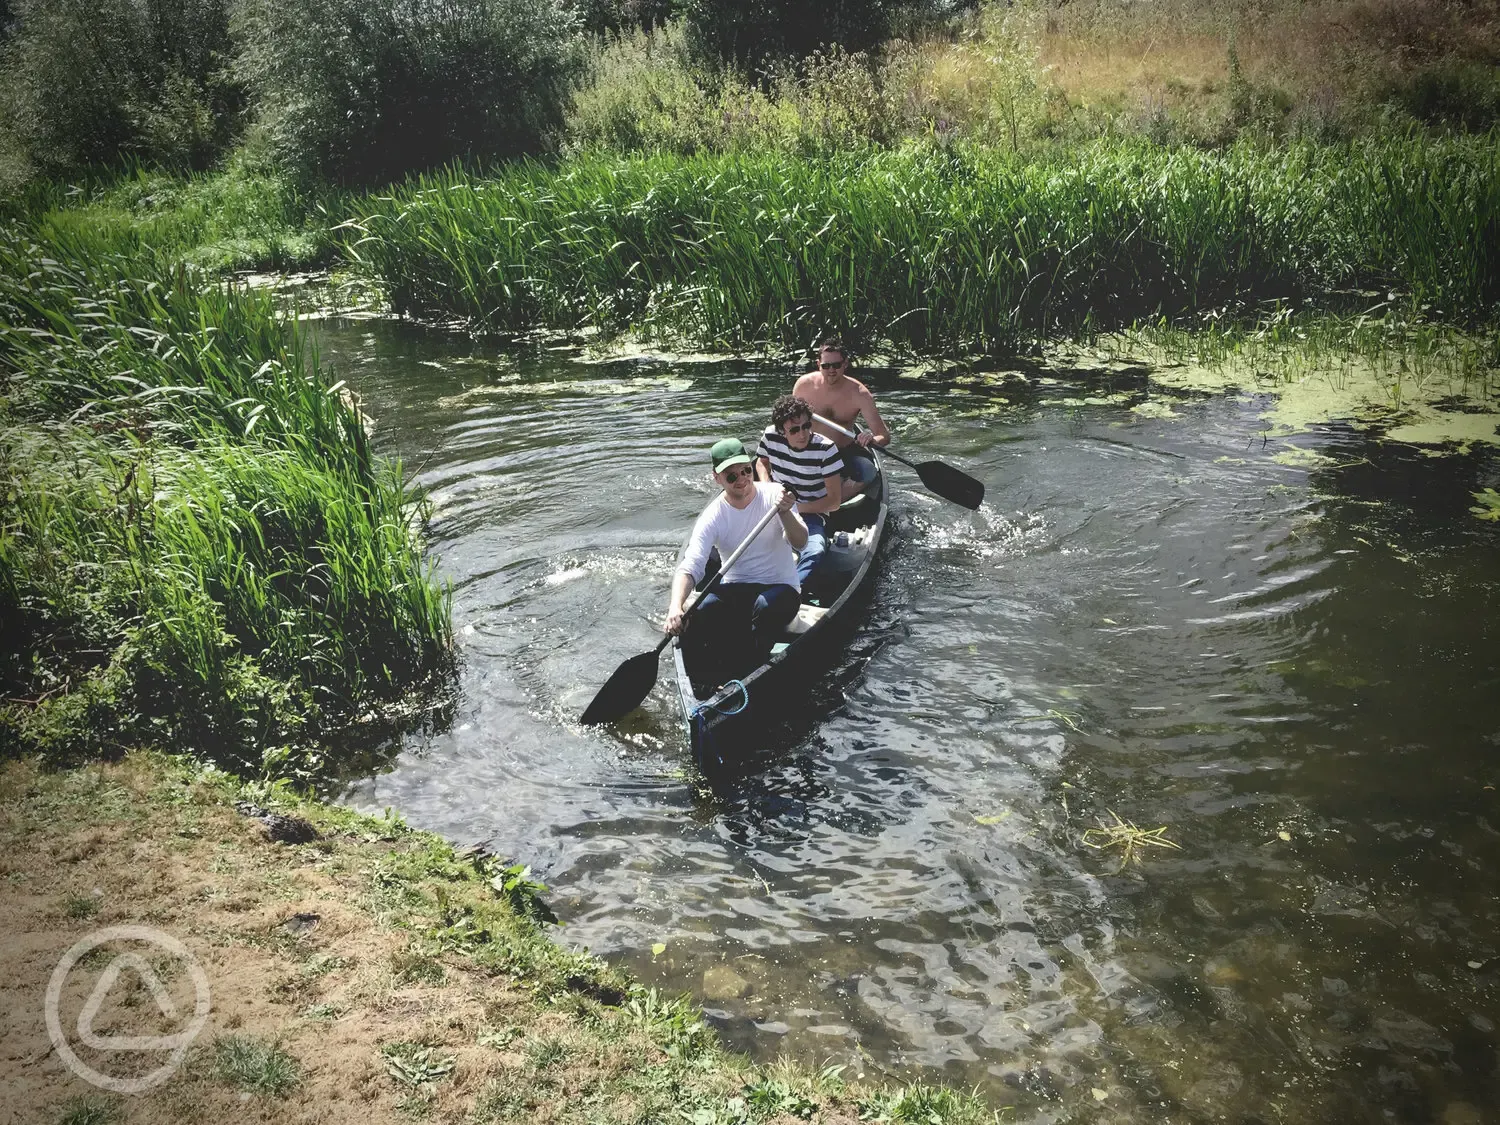 Canoe rental available!